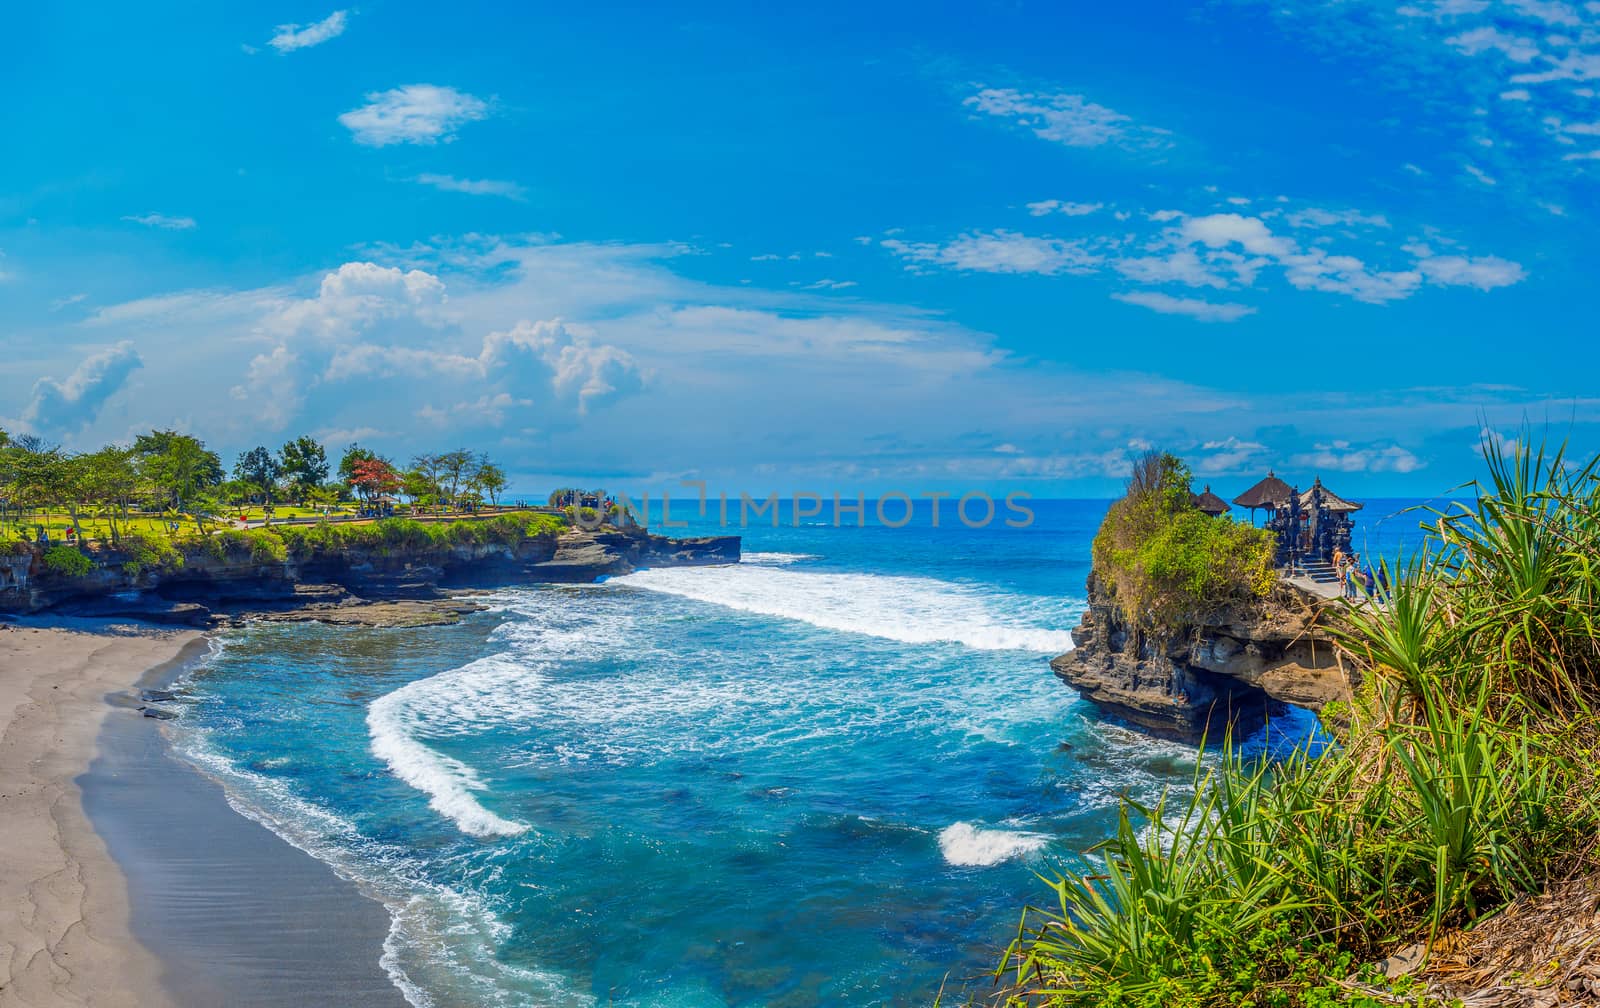 Temple in the sea( Pura tanah lot) Bali  by Netfalls